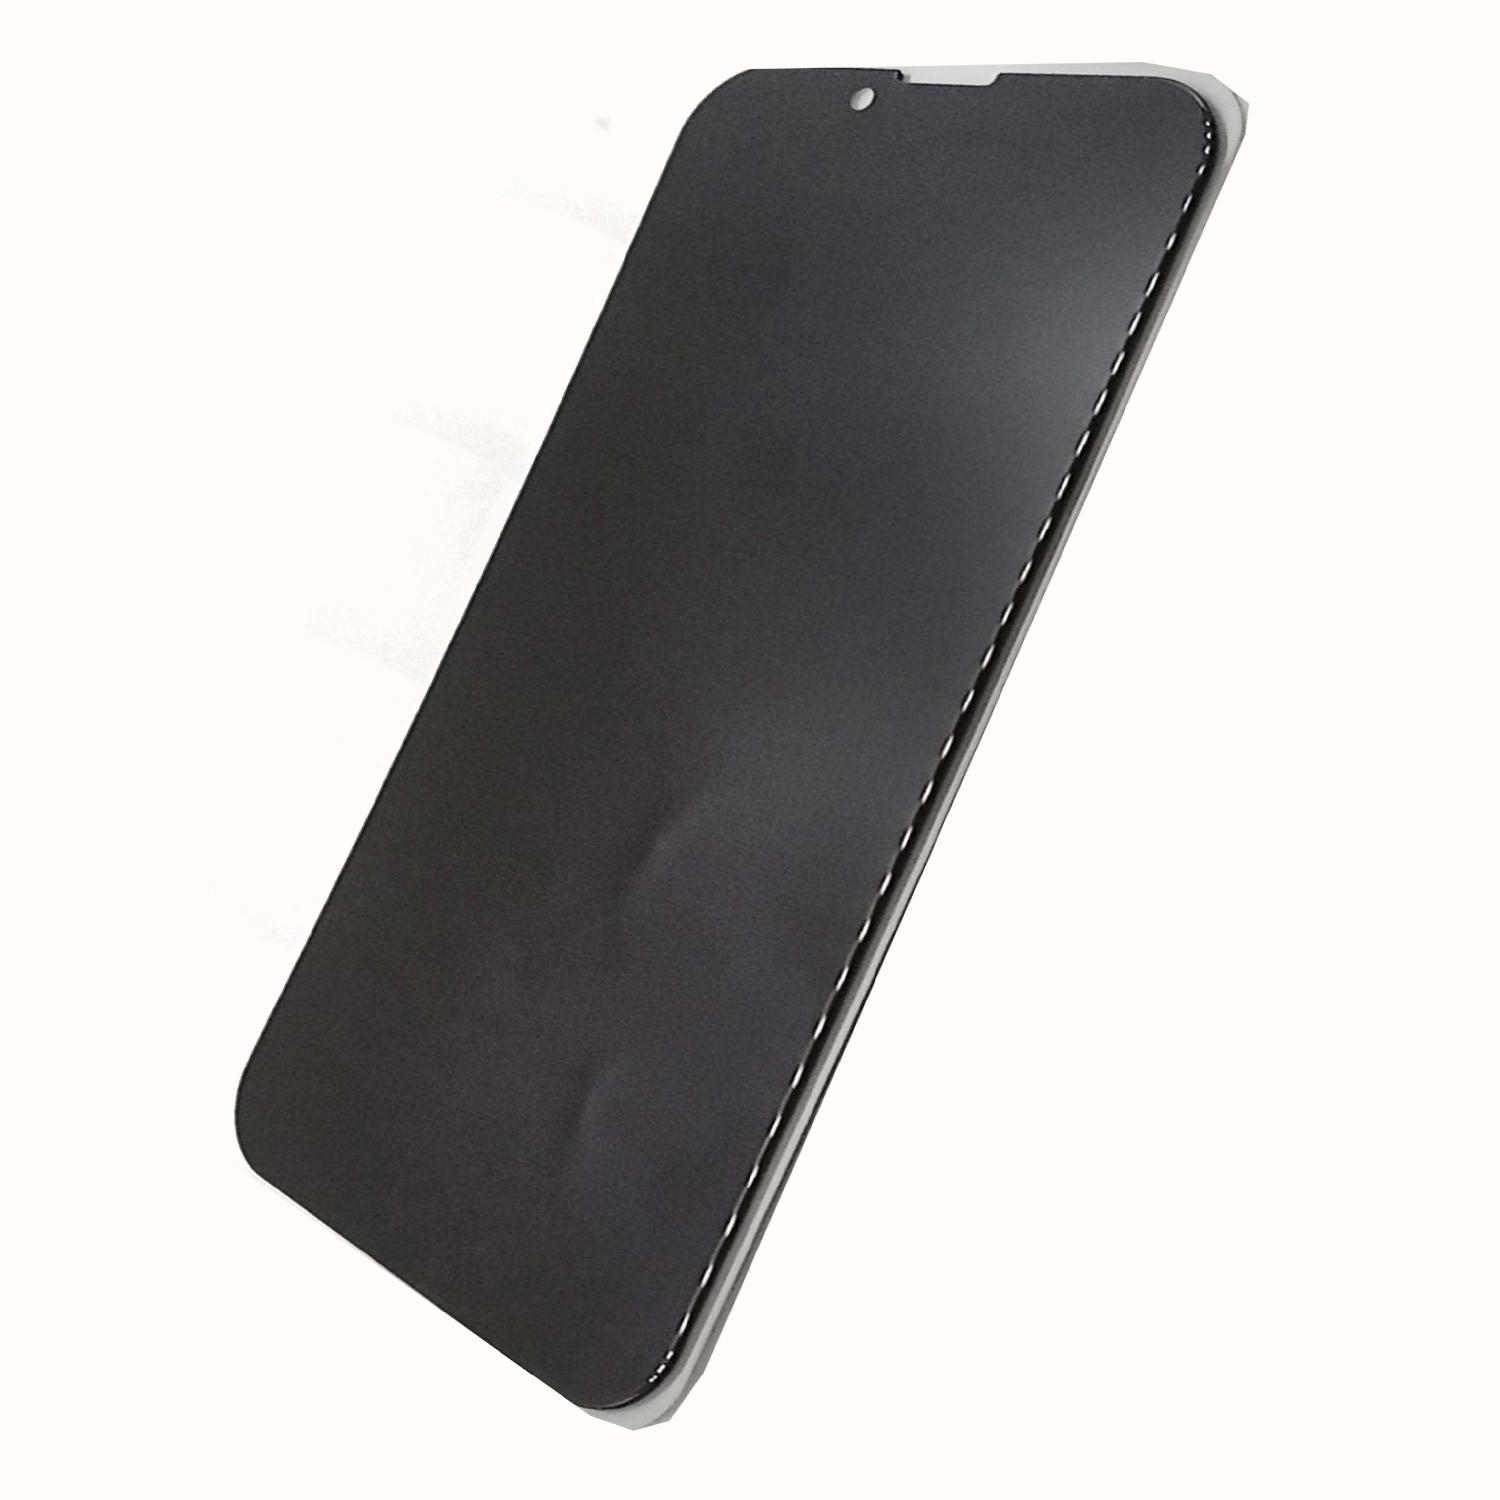 Защитное стекло телефона iPhone XR/11 антишпион черное